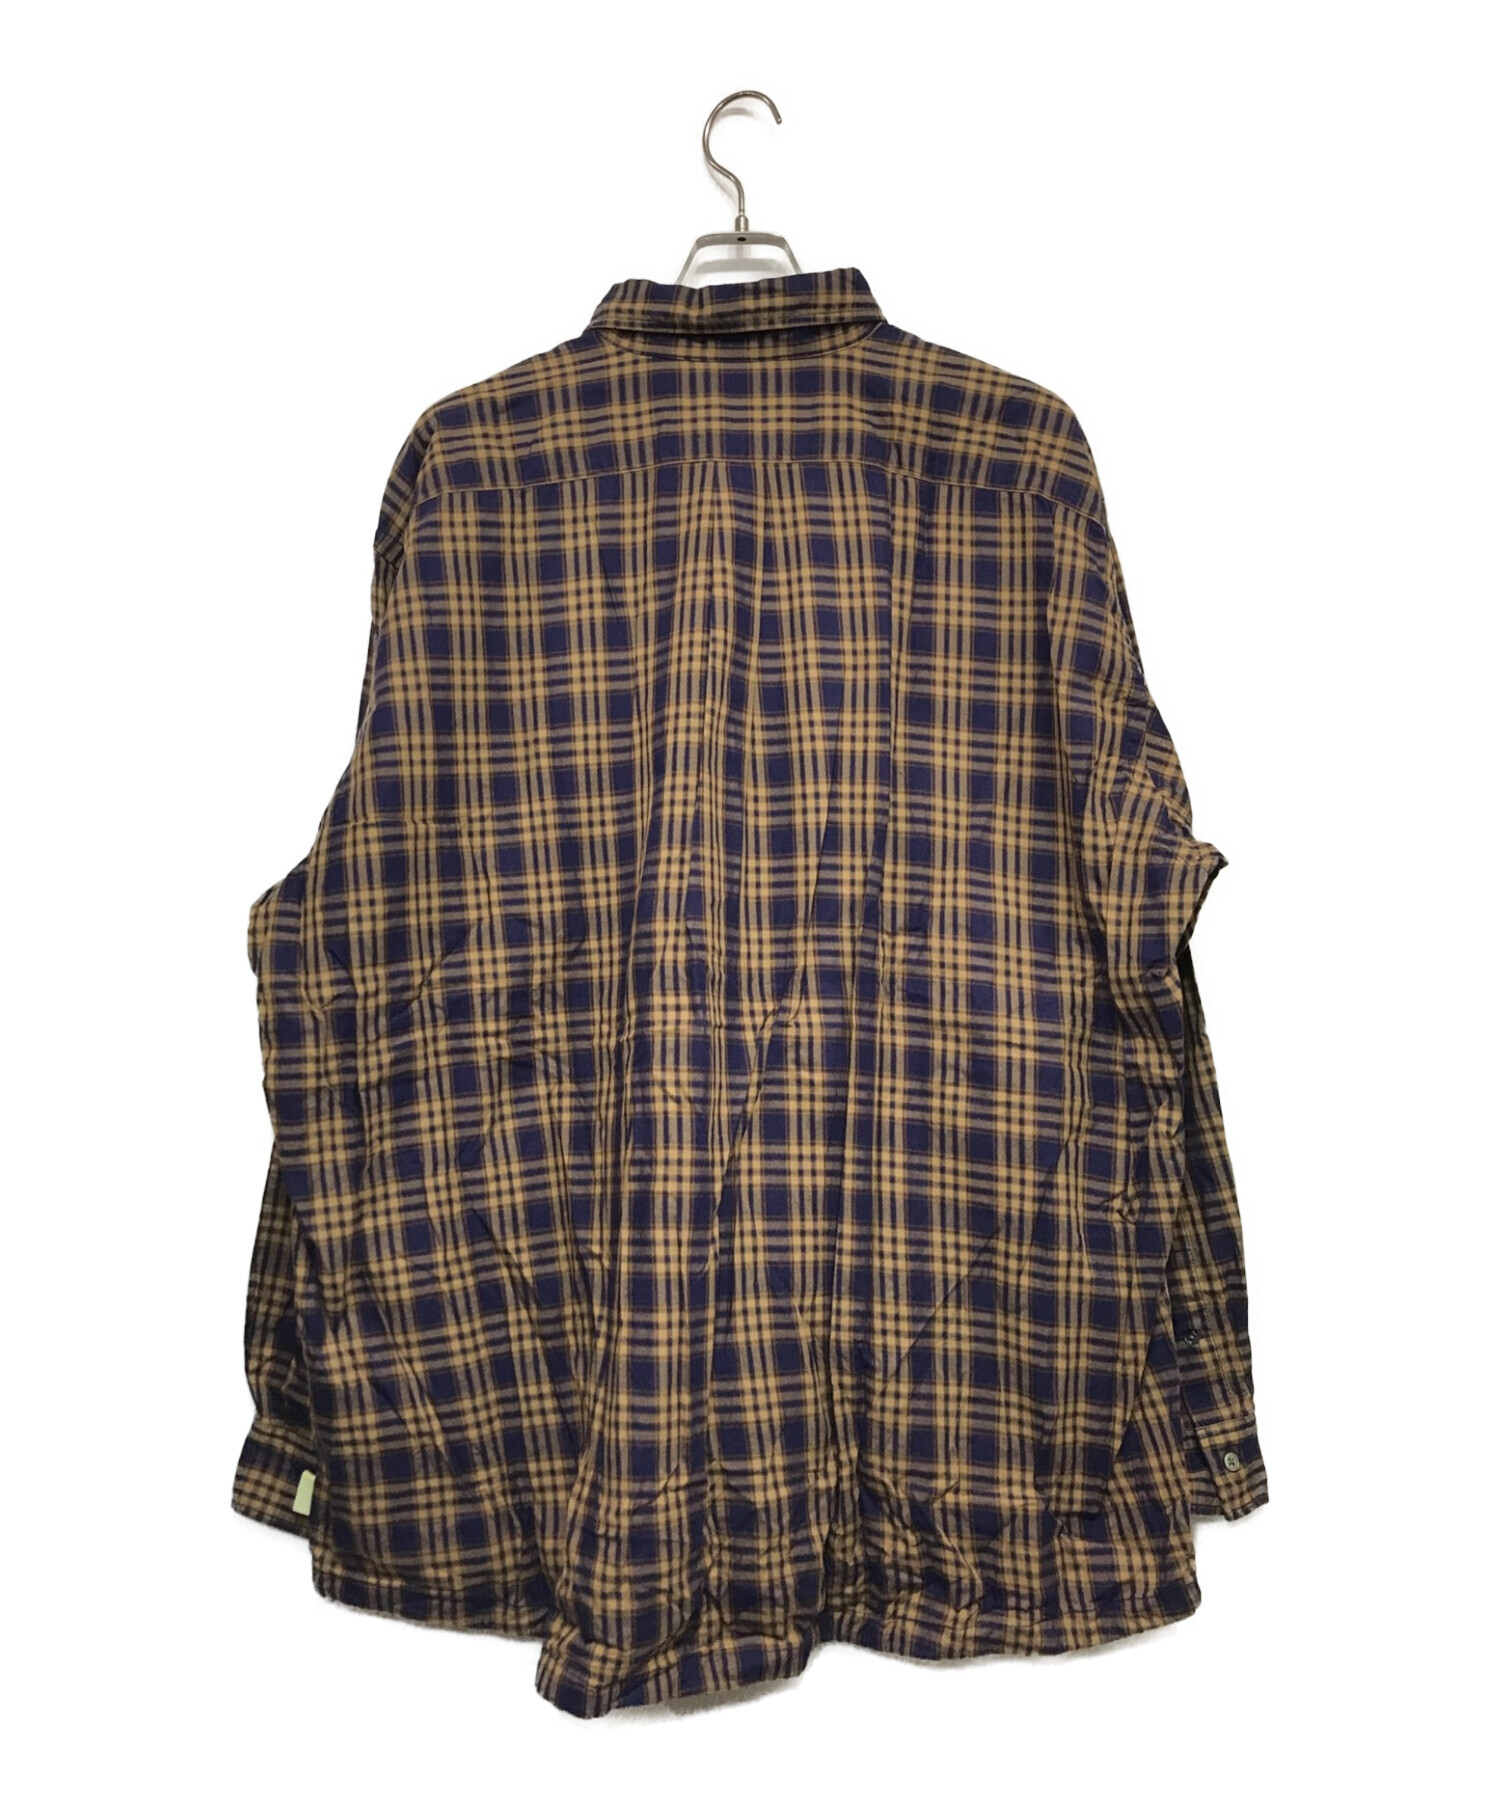 BEAMS (ビームス) SSZ RIDE ON SHIRTS チェックシャツ ブラウン×ネイビー サイズ:L